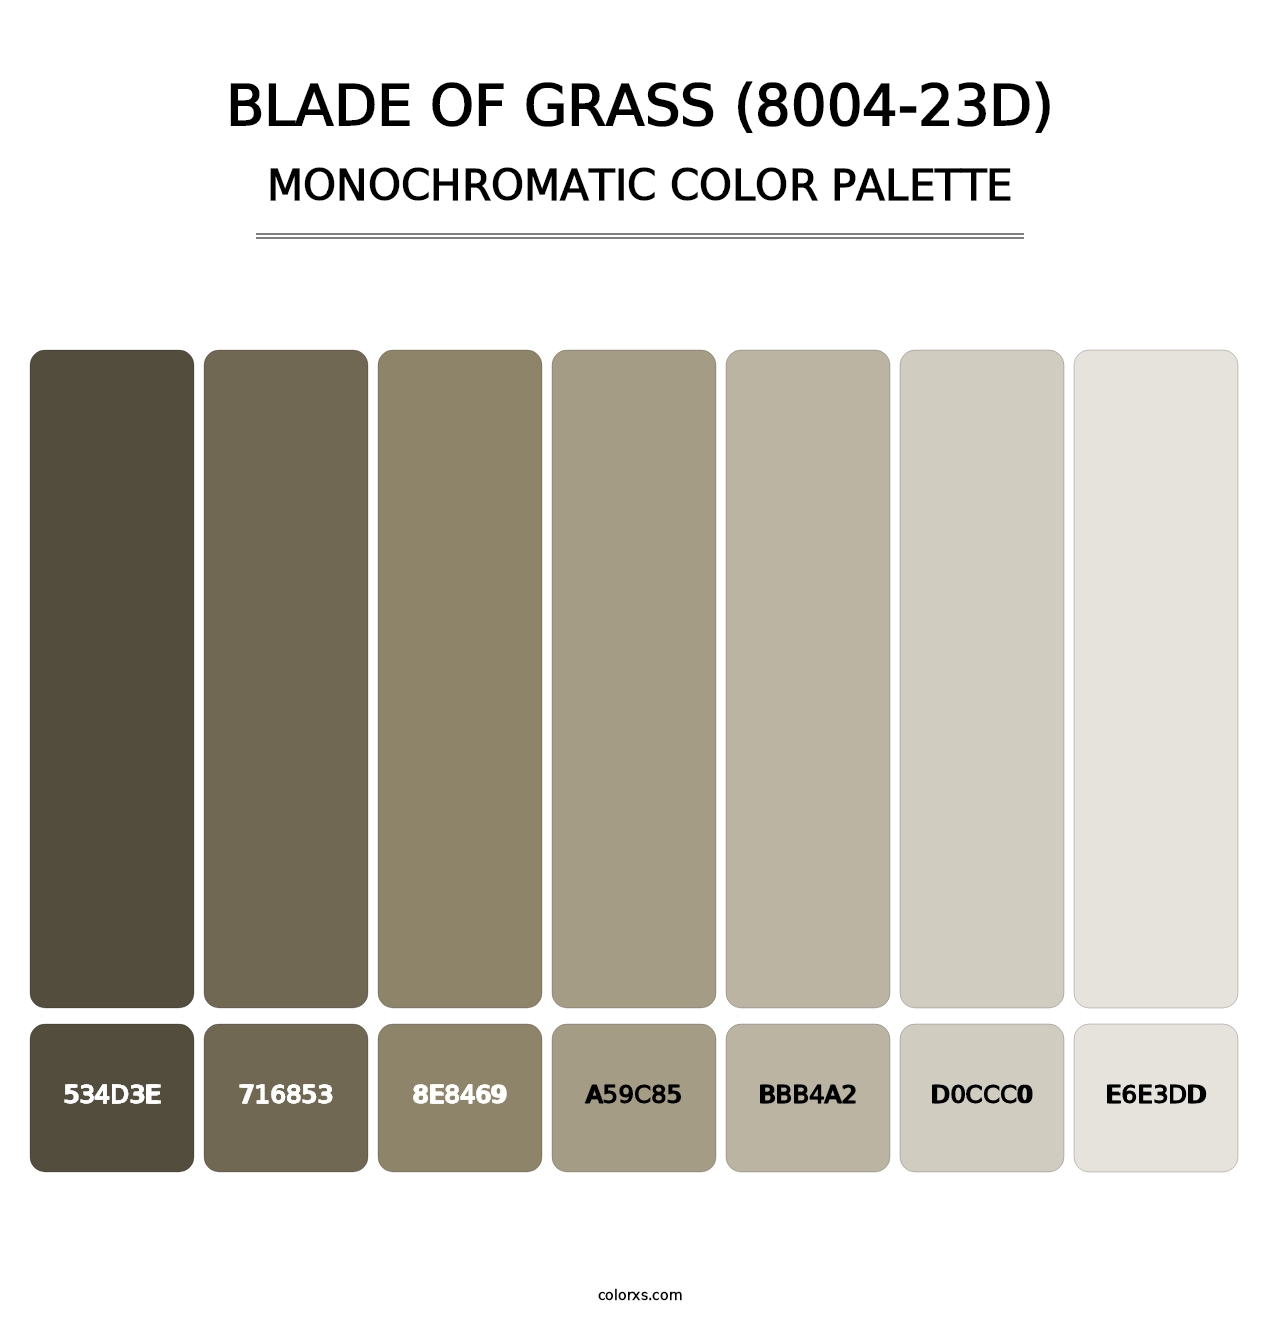 Blade of Grass (8004-23D) - Monochromatic Color Palette